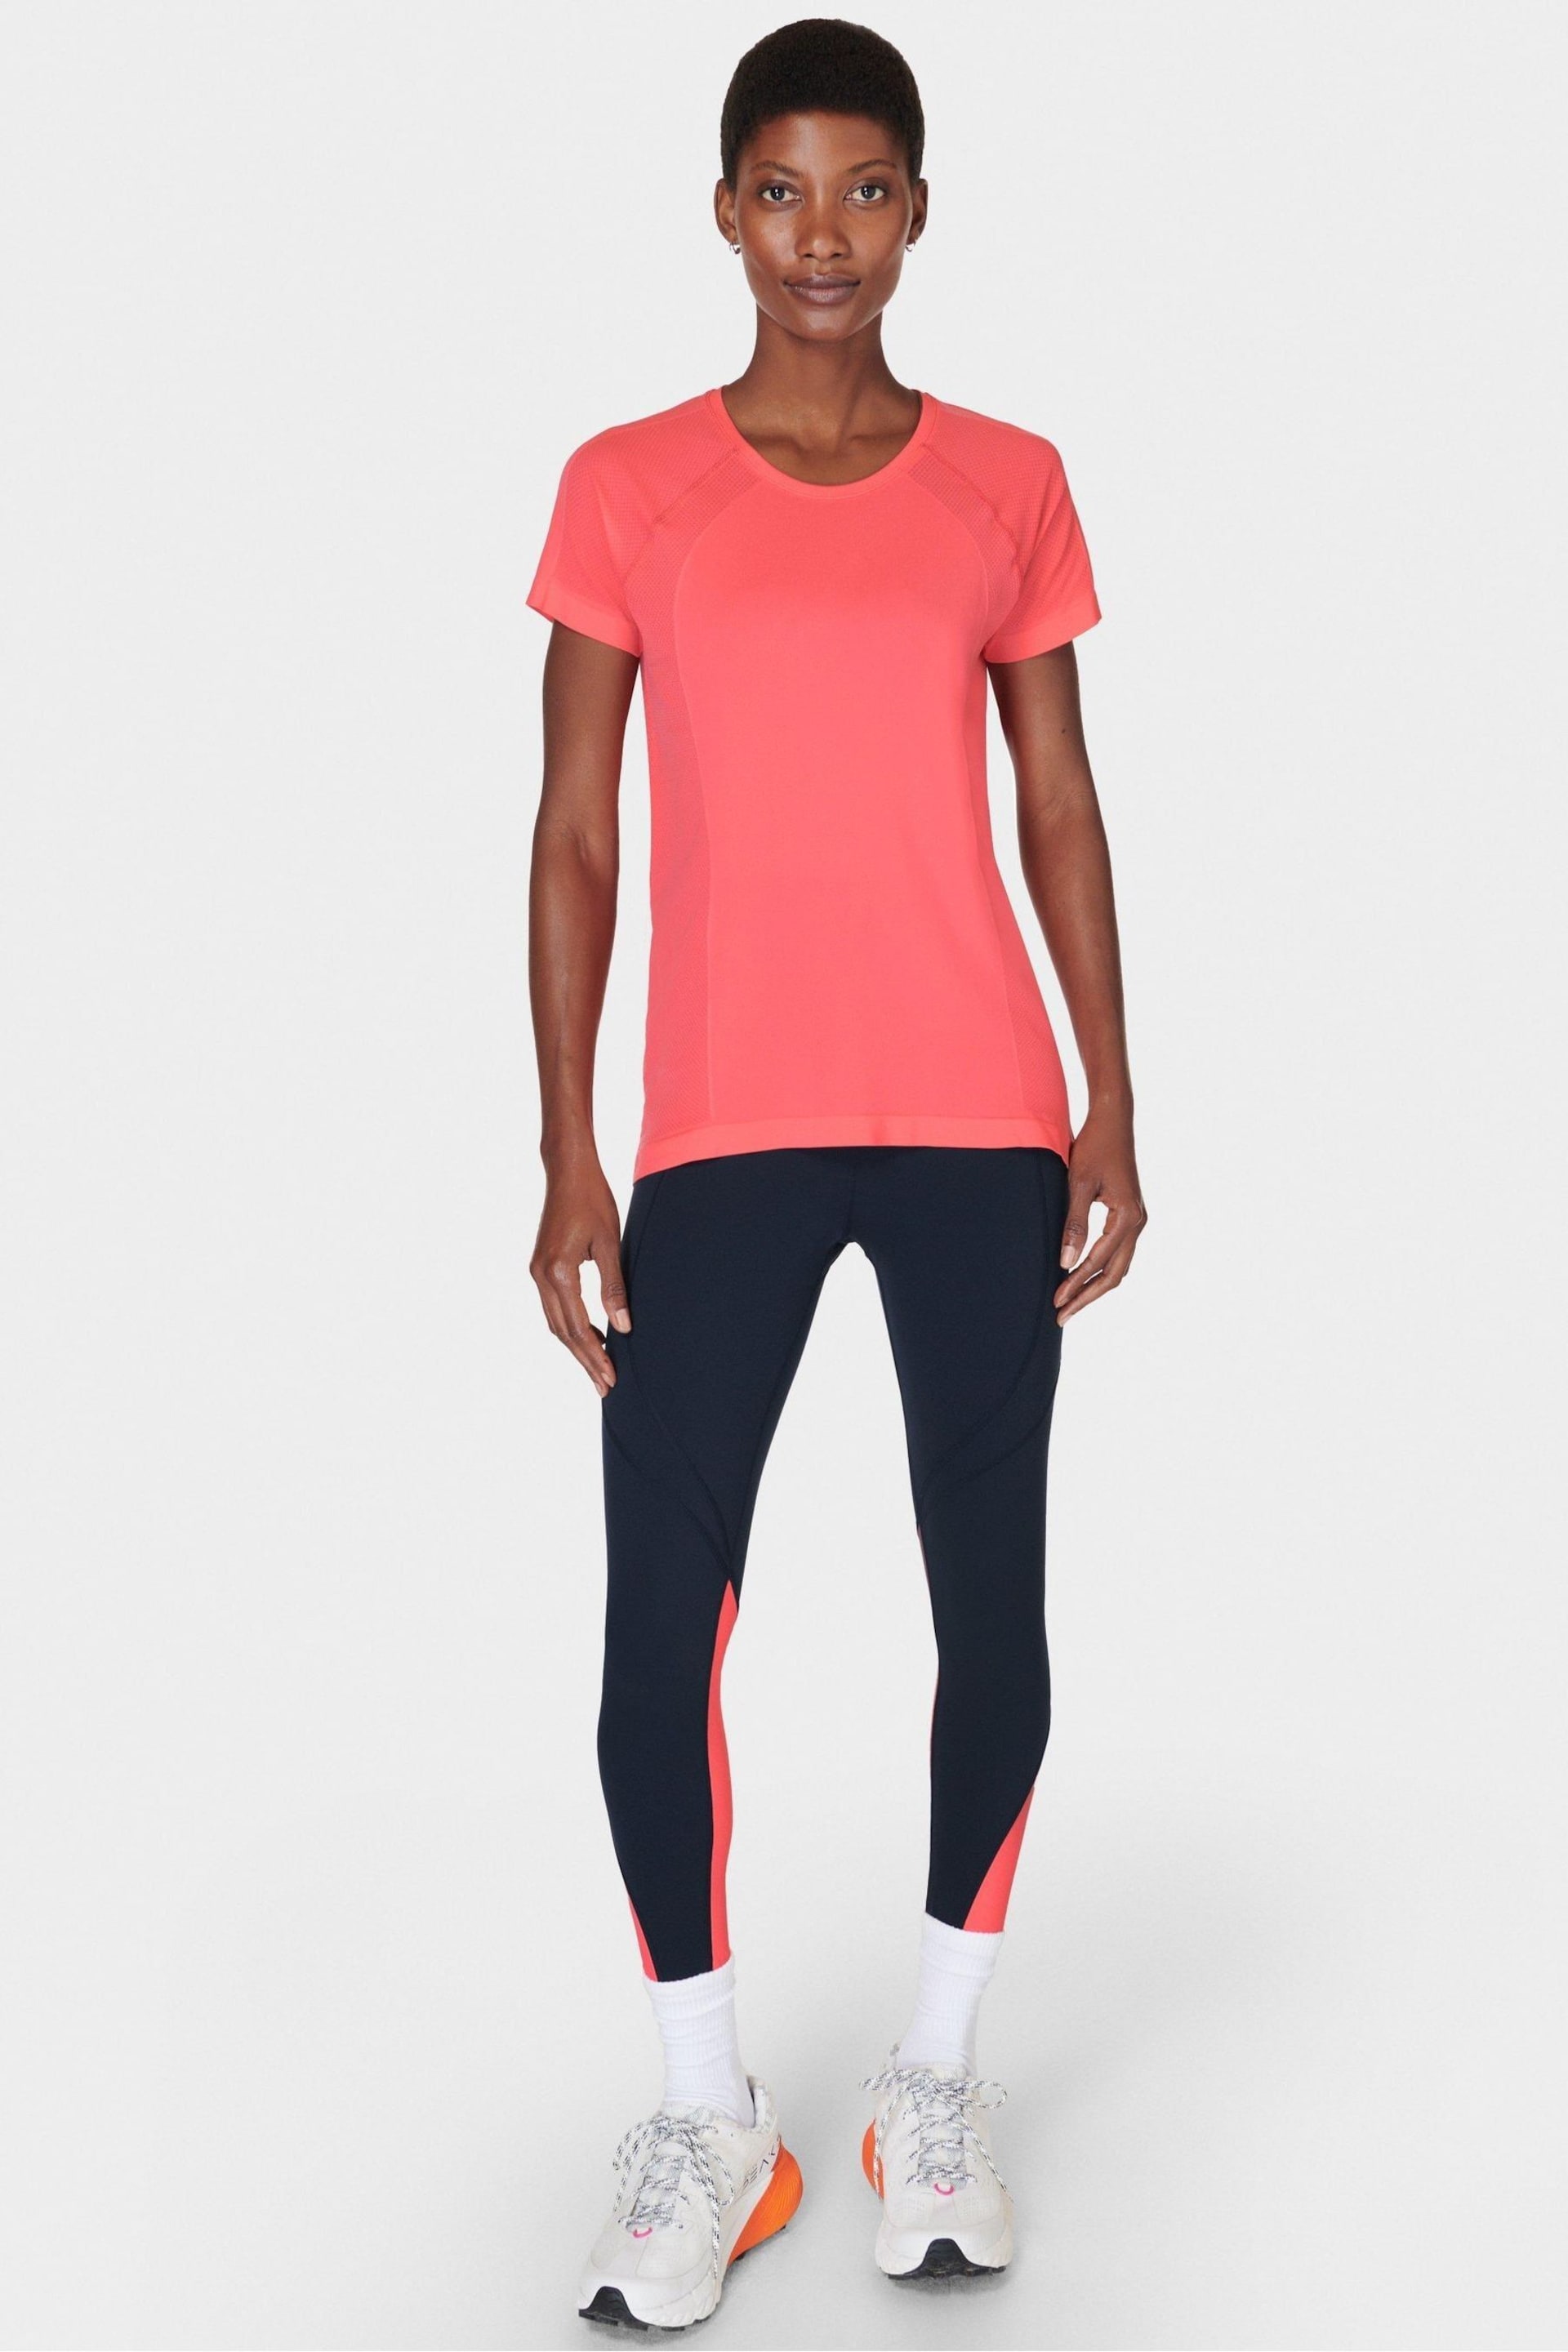 Sweaty Betty Coral Pink Athlete Seamless Featherweight T-Shirt - Image 5 of 7